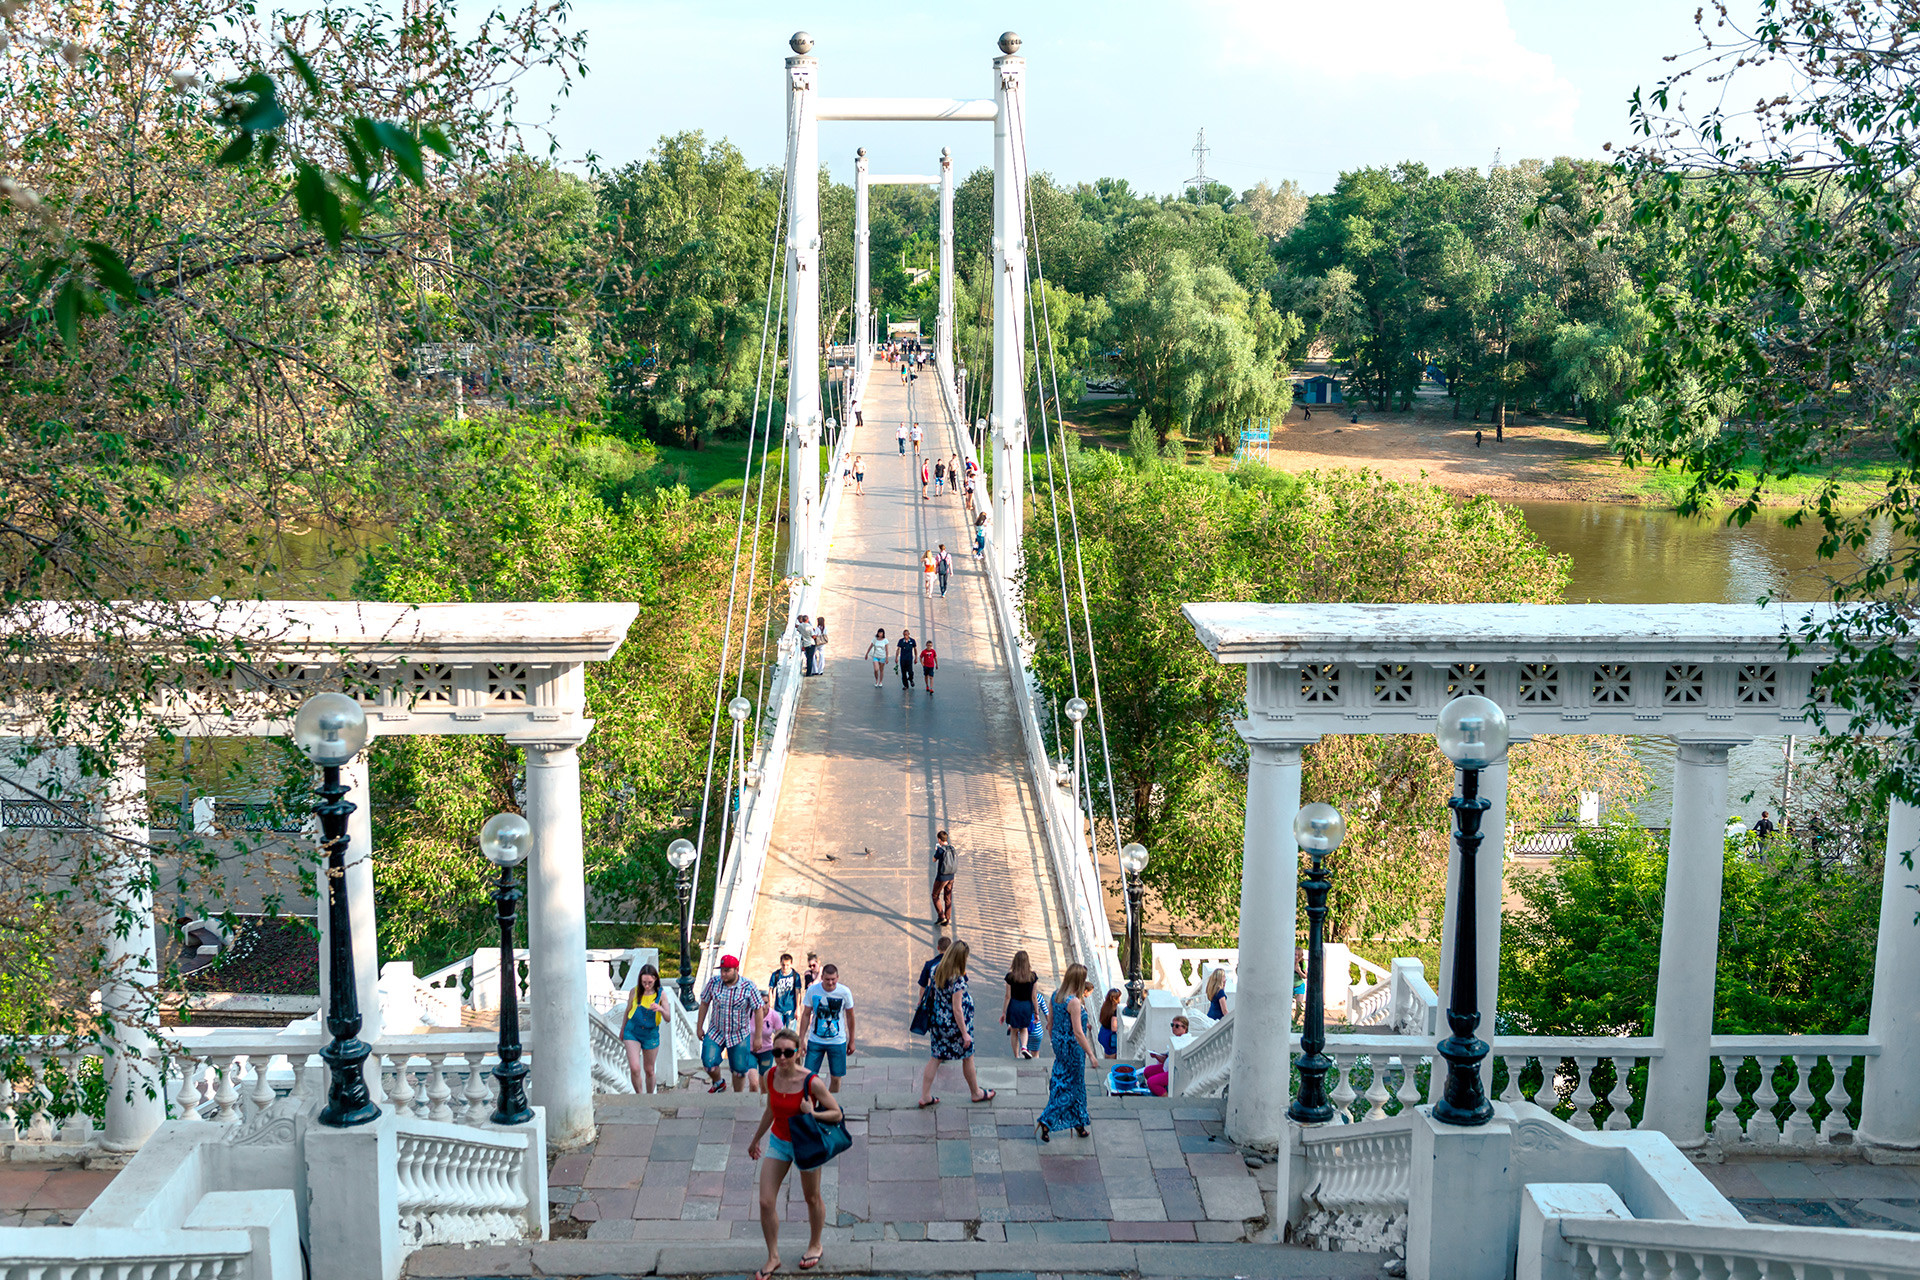 The pedestrian bridge over the Ural River in Orenburg.